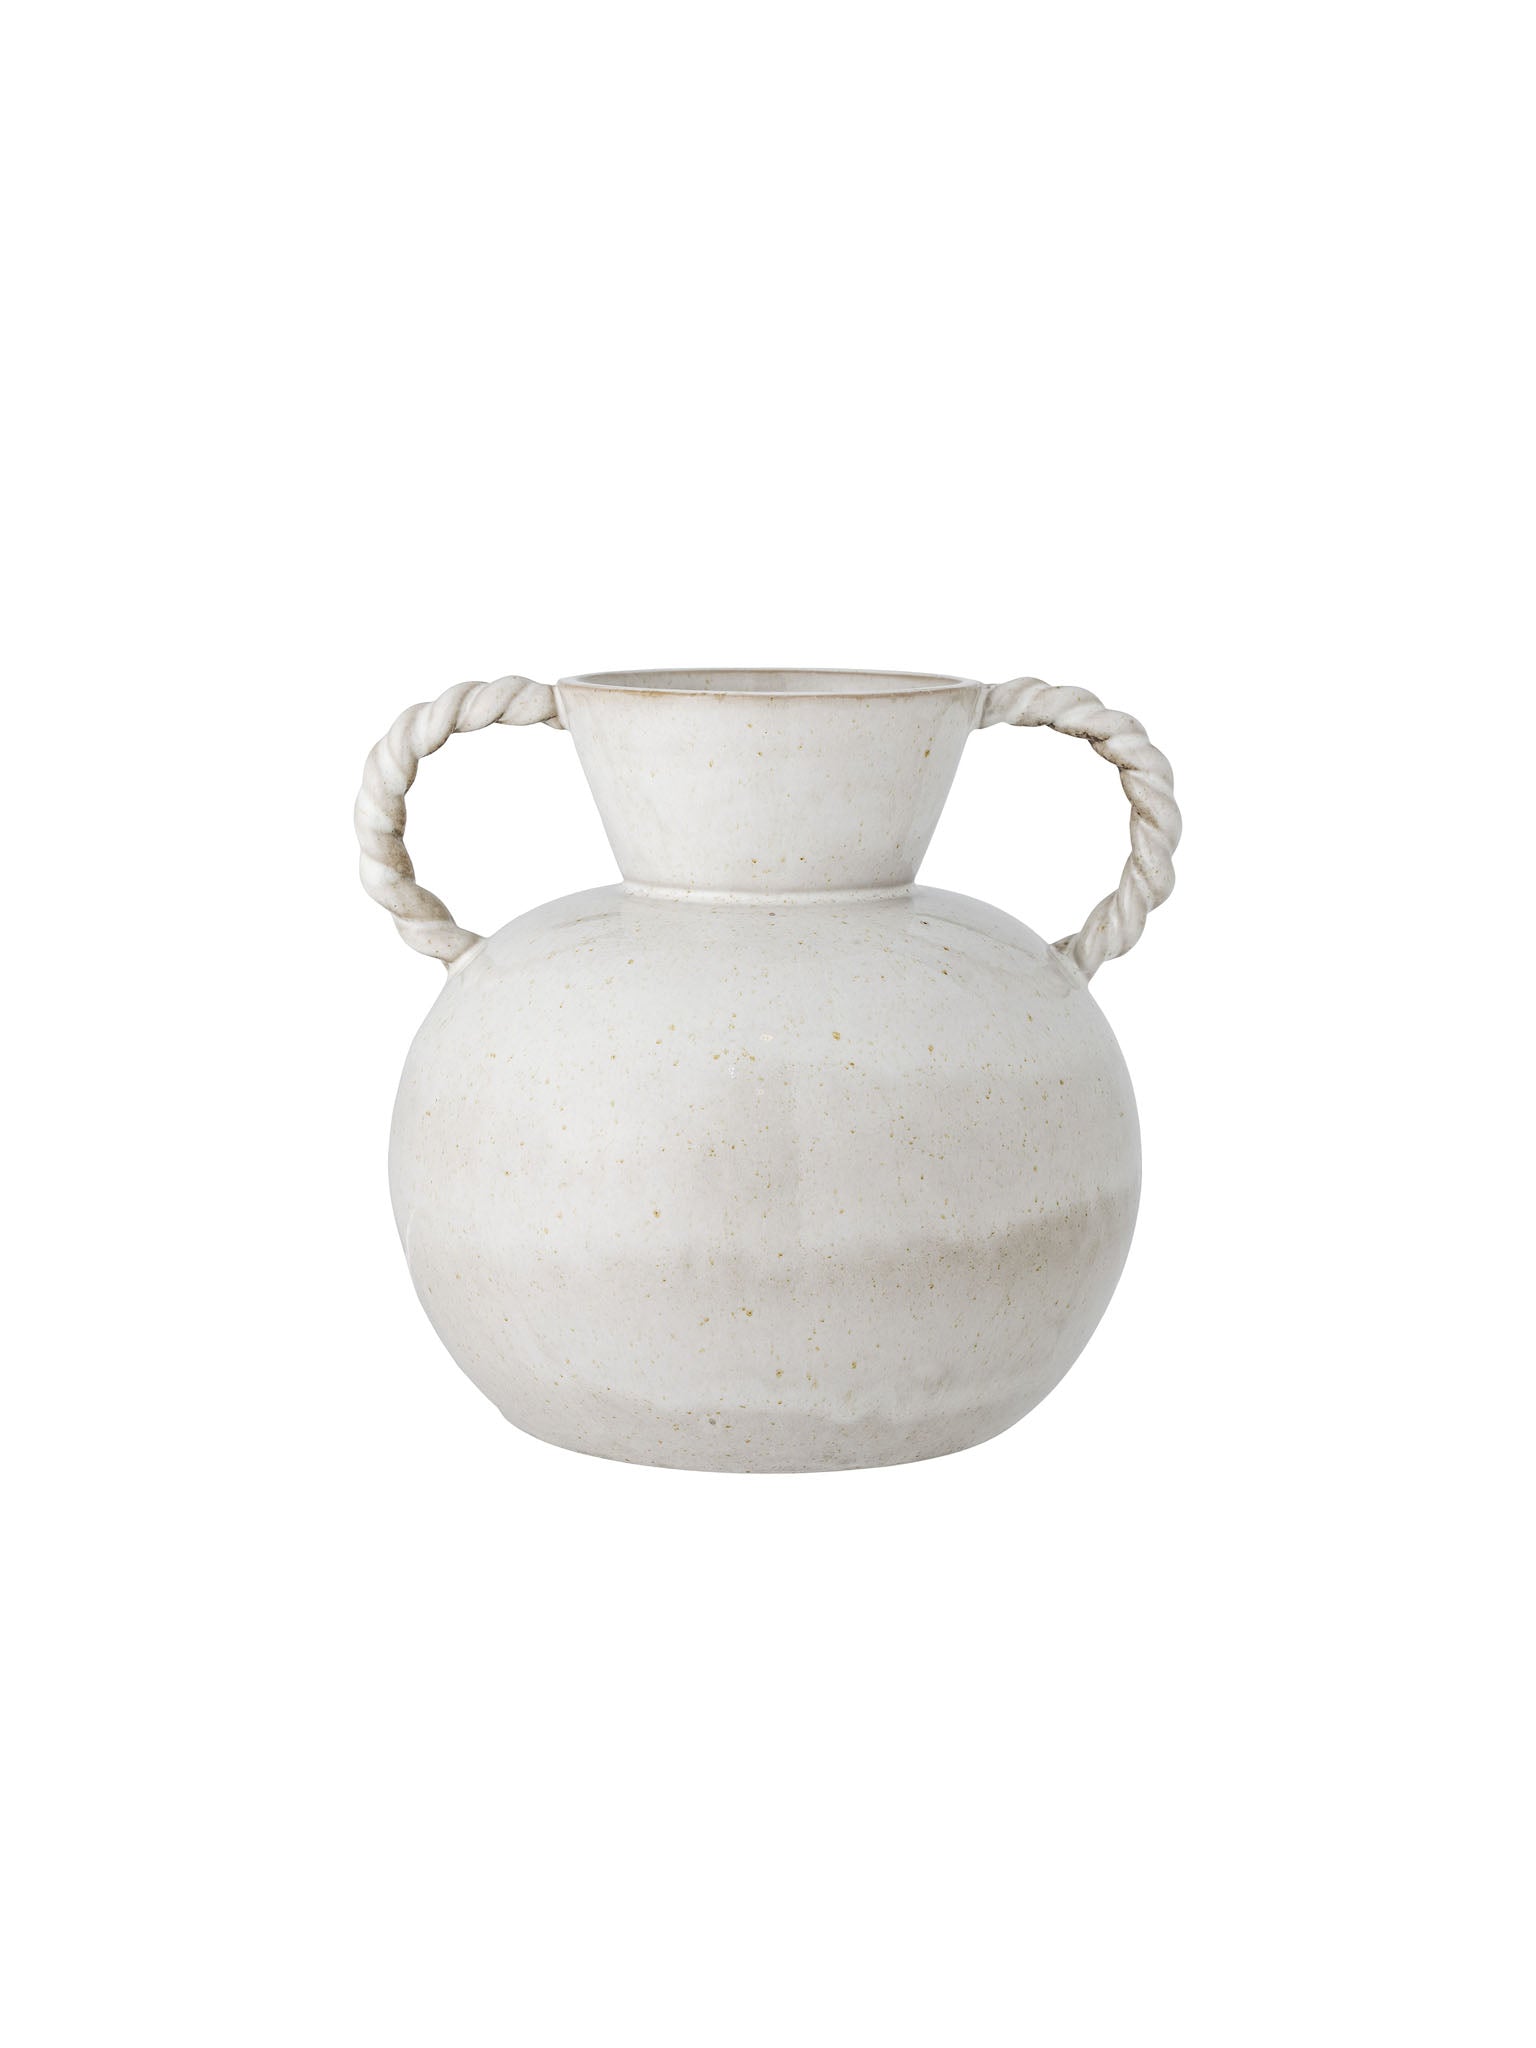 white braided handled urn vase